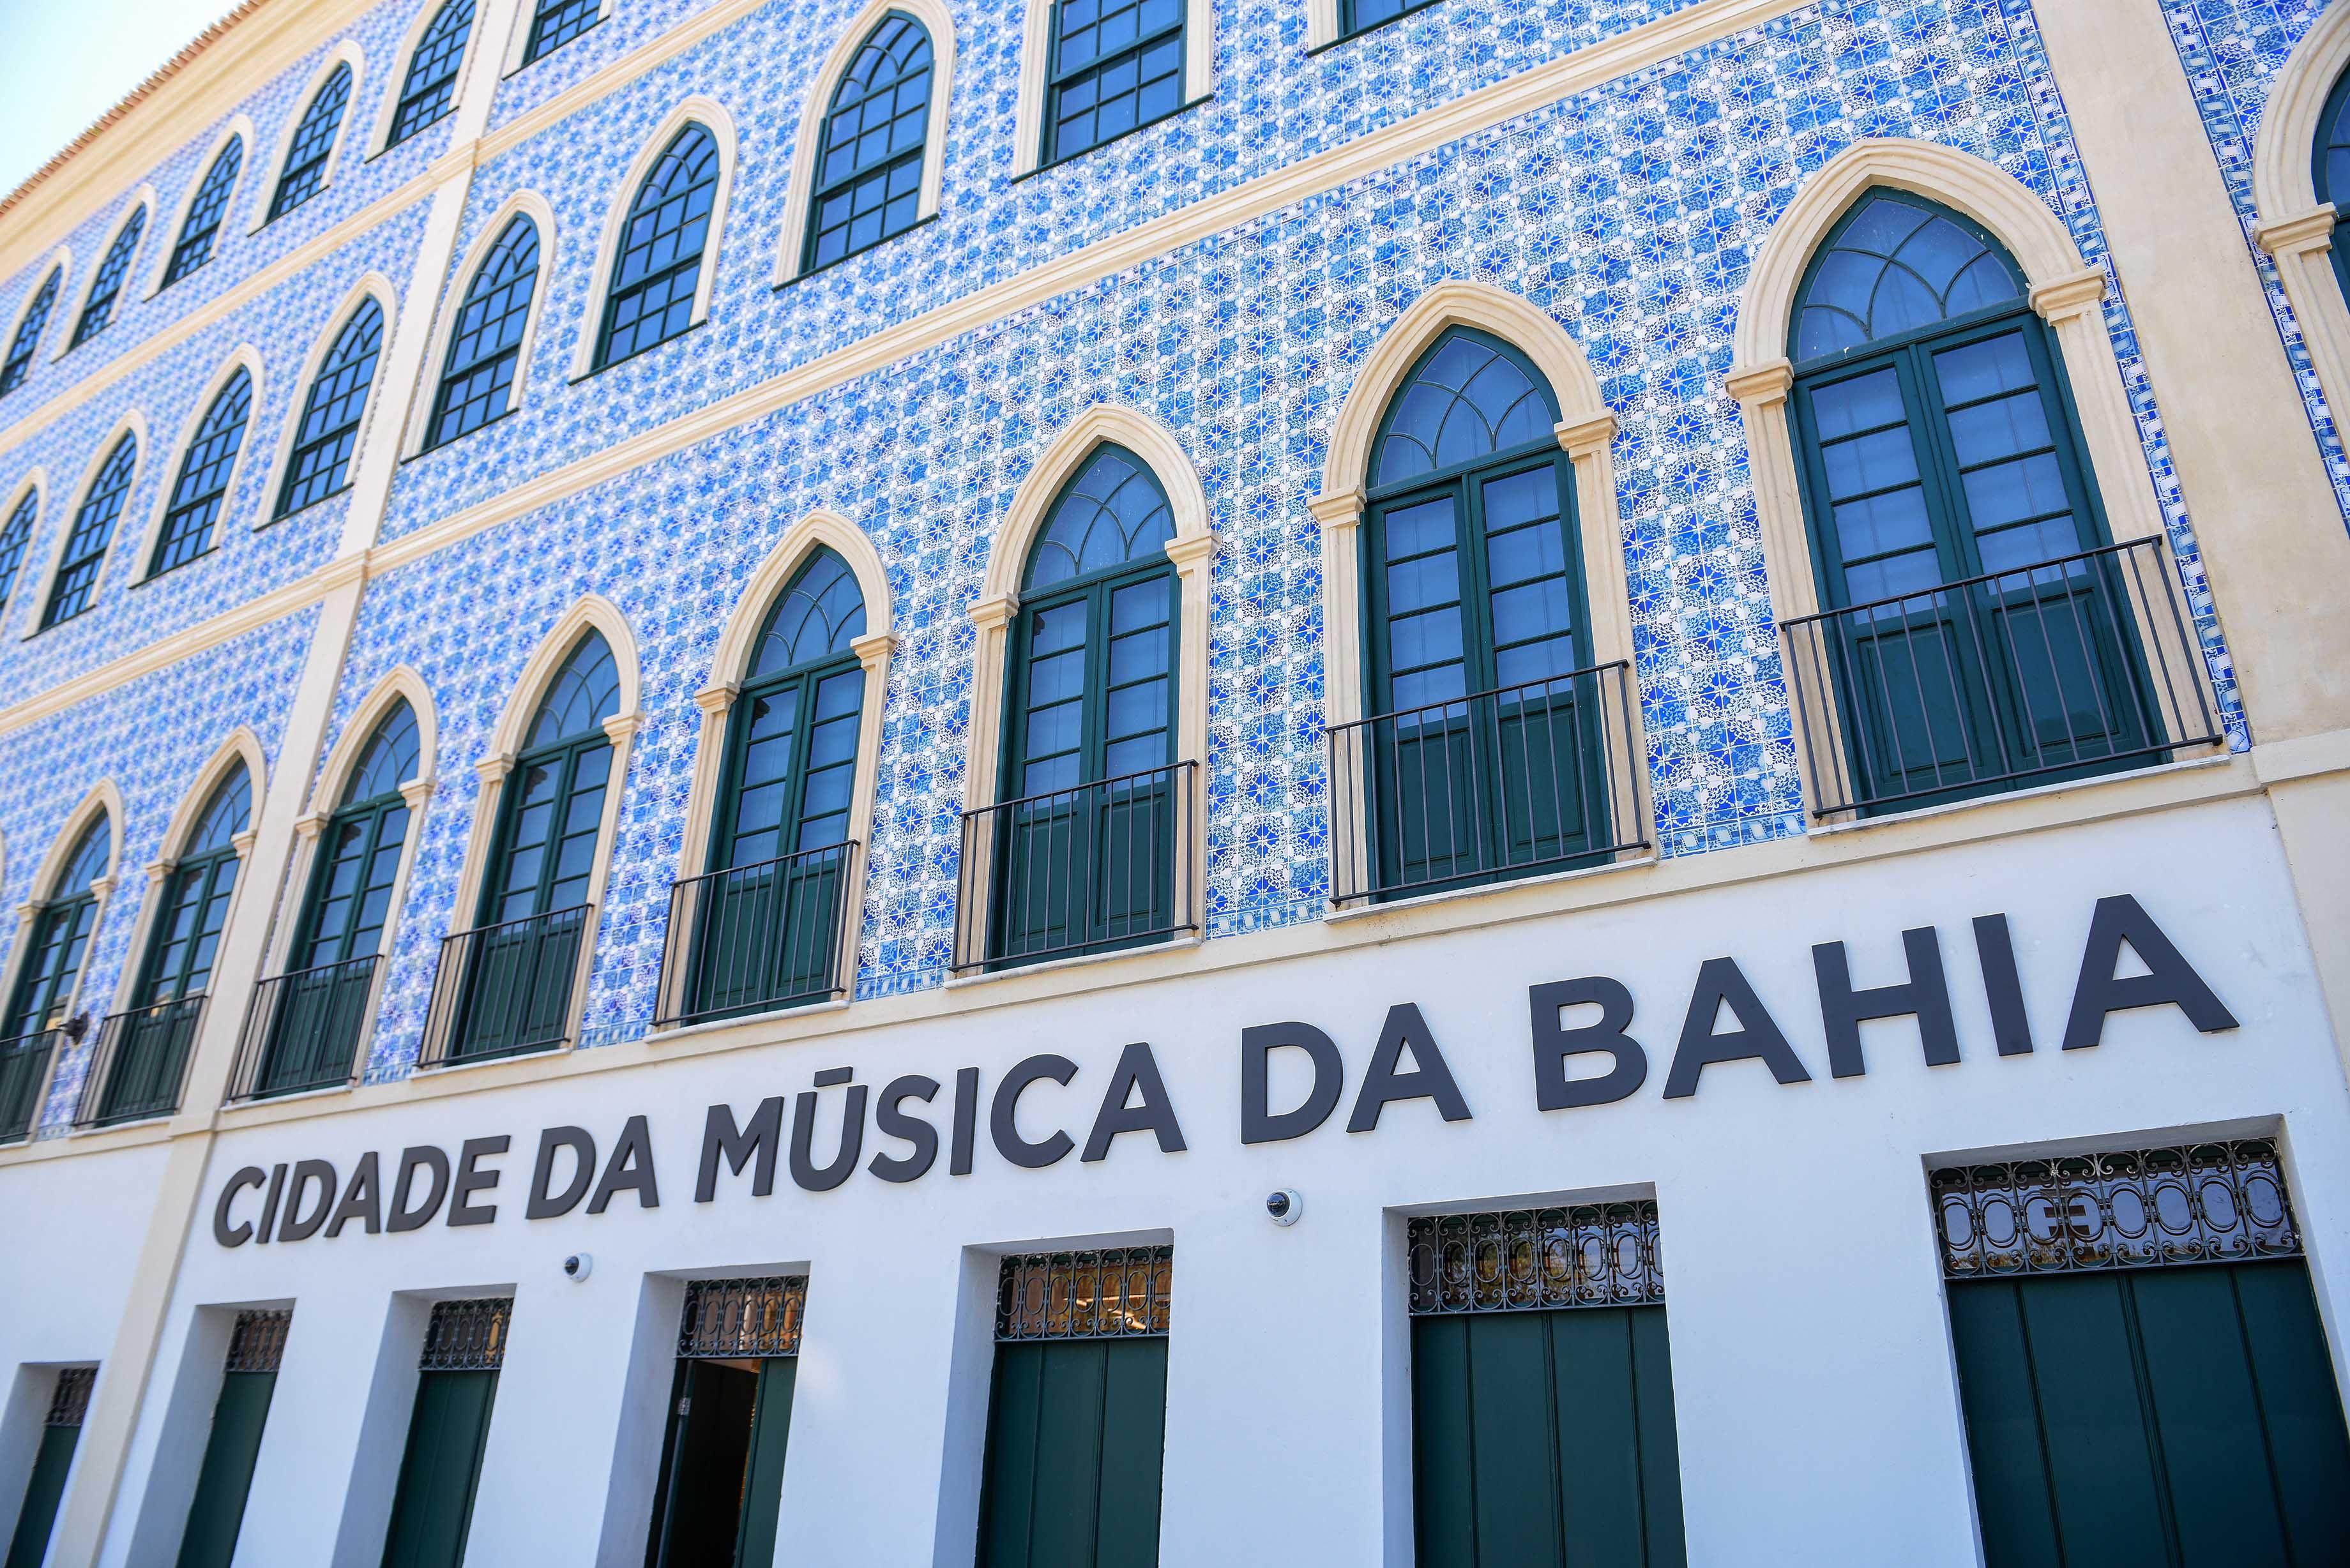 Salvador gets unprecedented space in honor of Bahia sounds